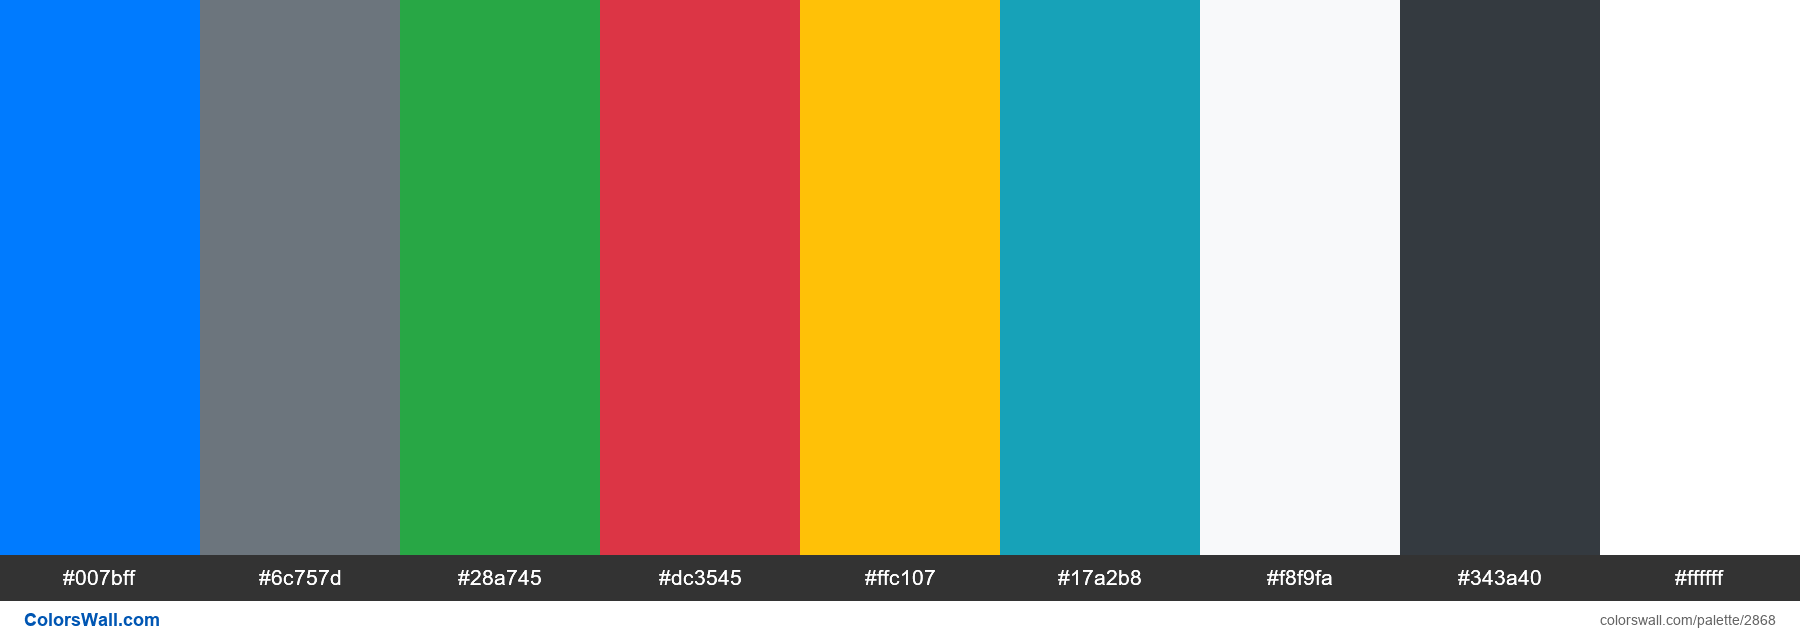 Bootstrap 4 background colors (classes) palette | ColorsWall